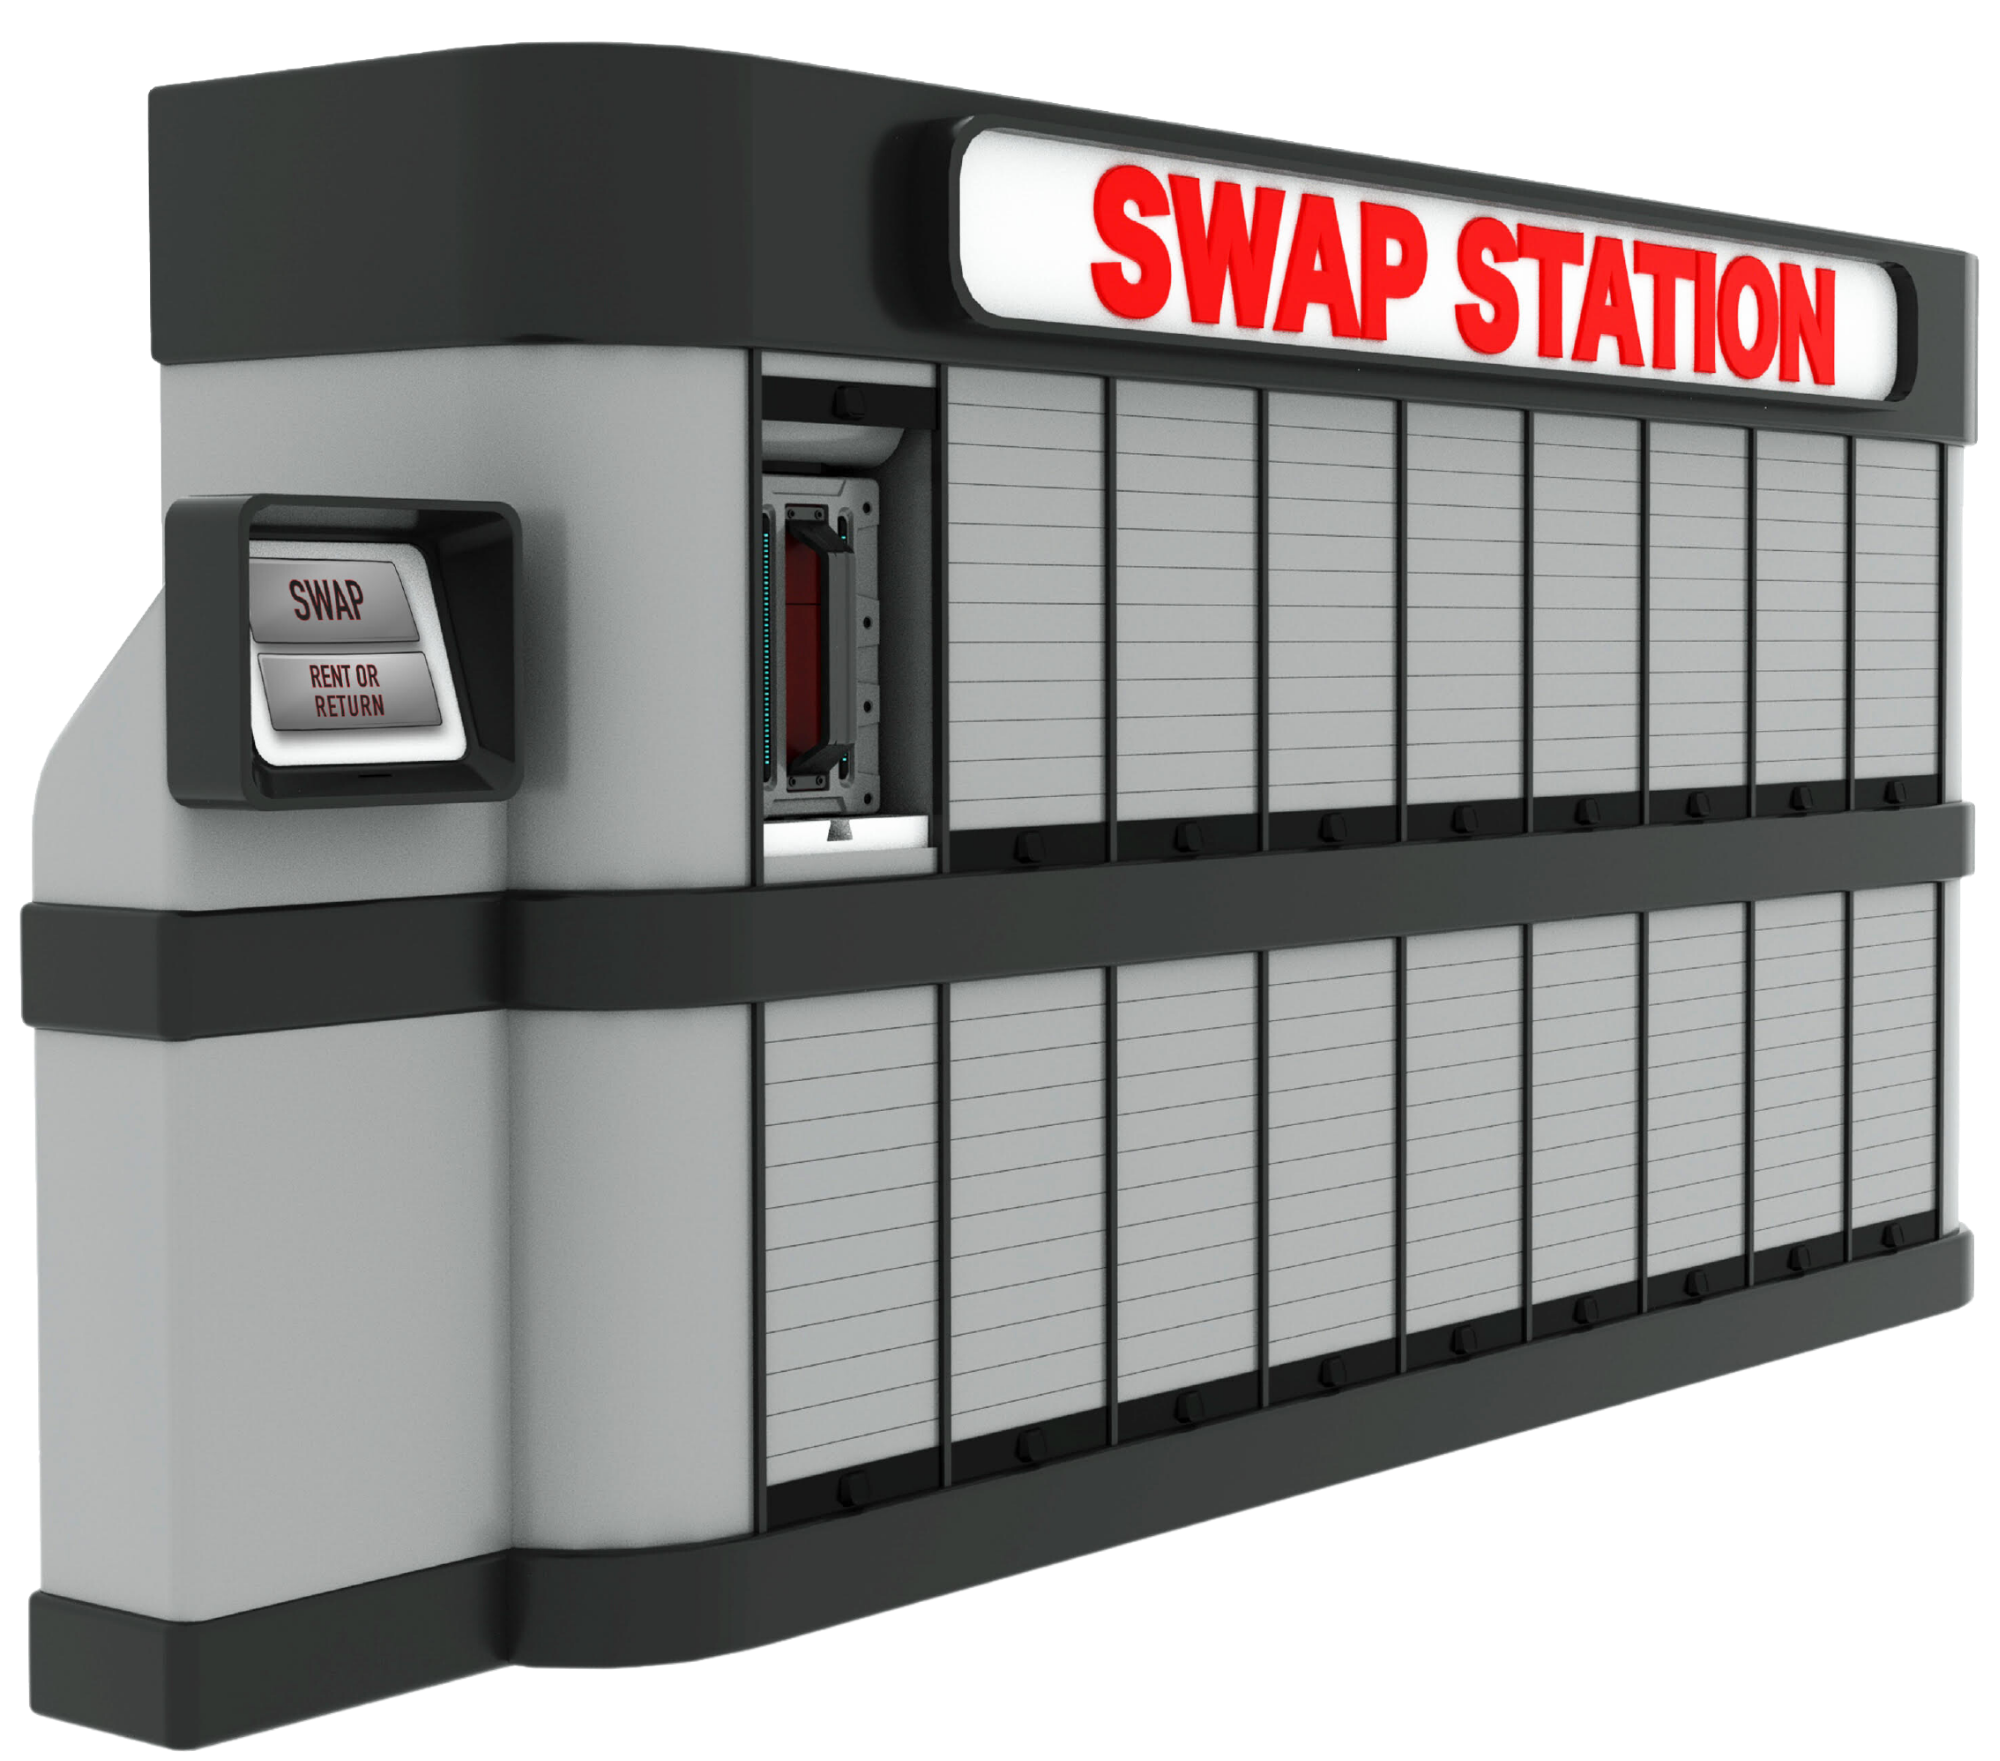 Swap Station